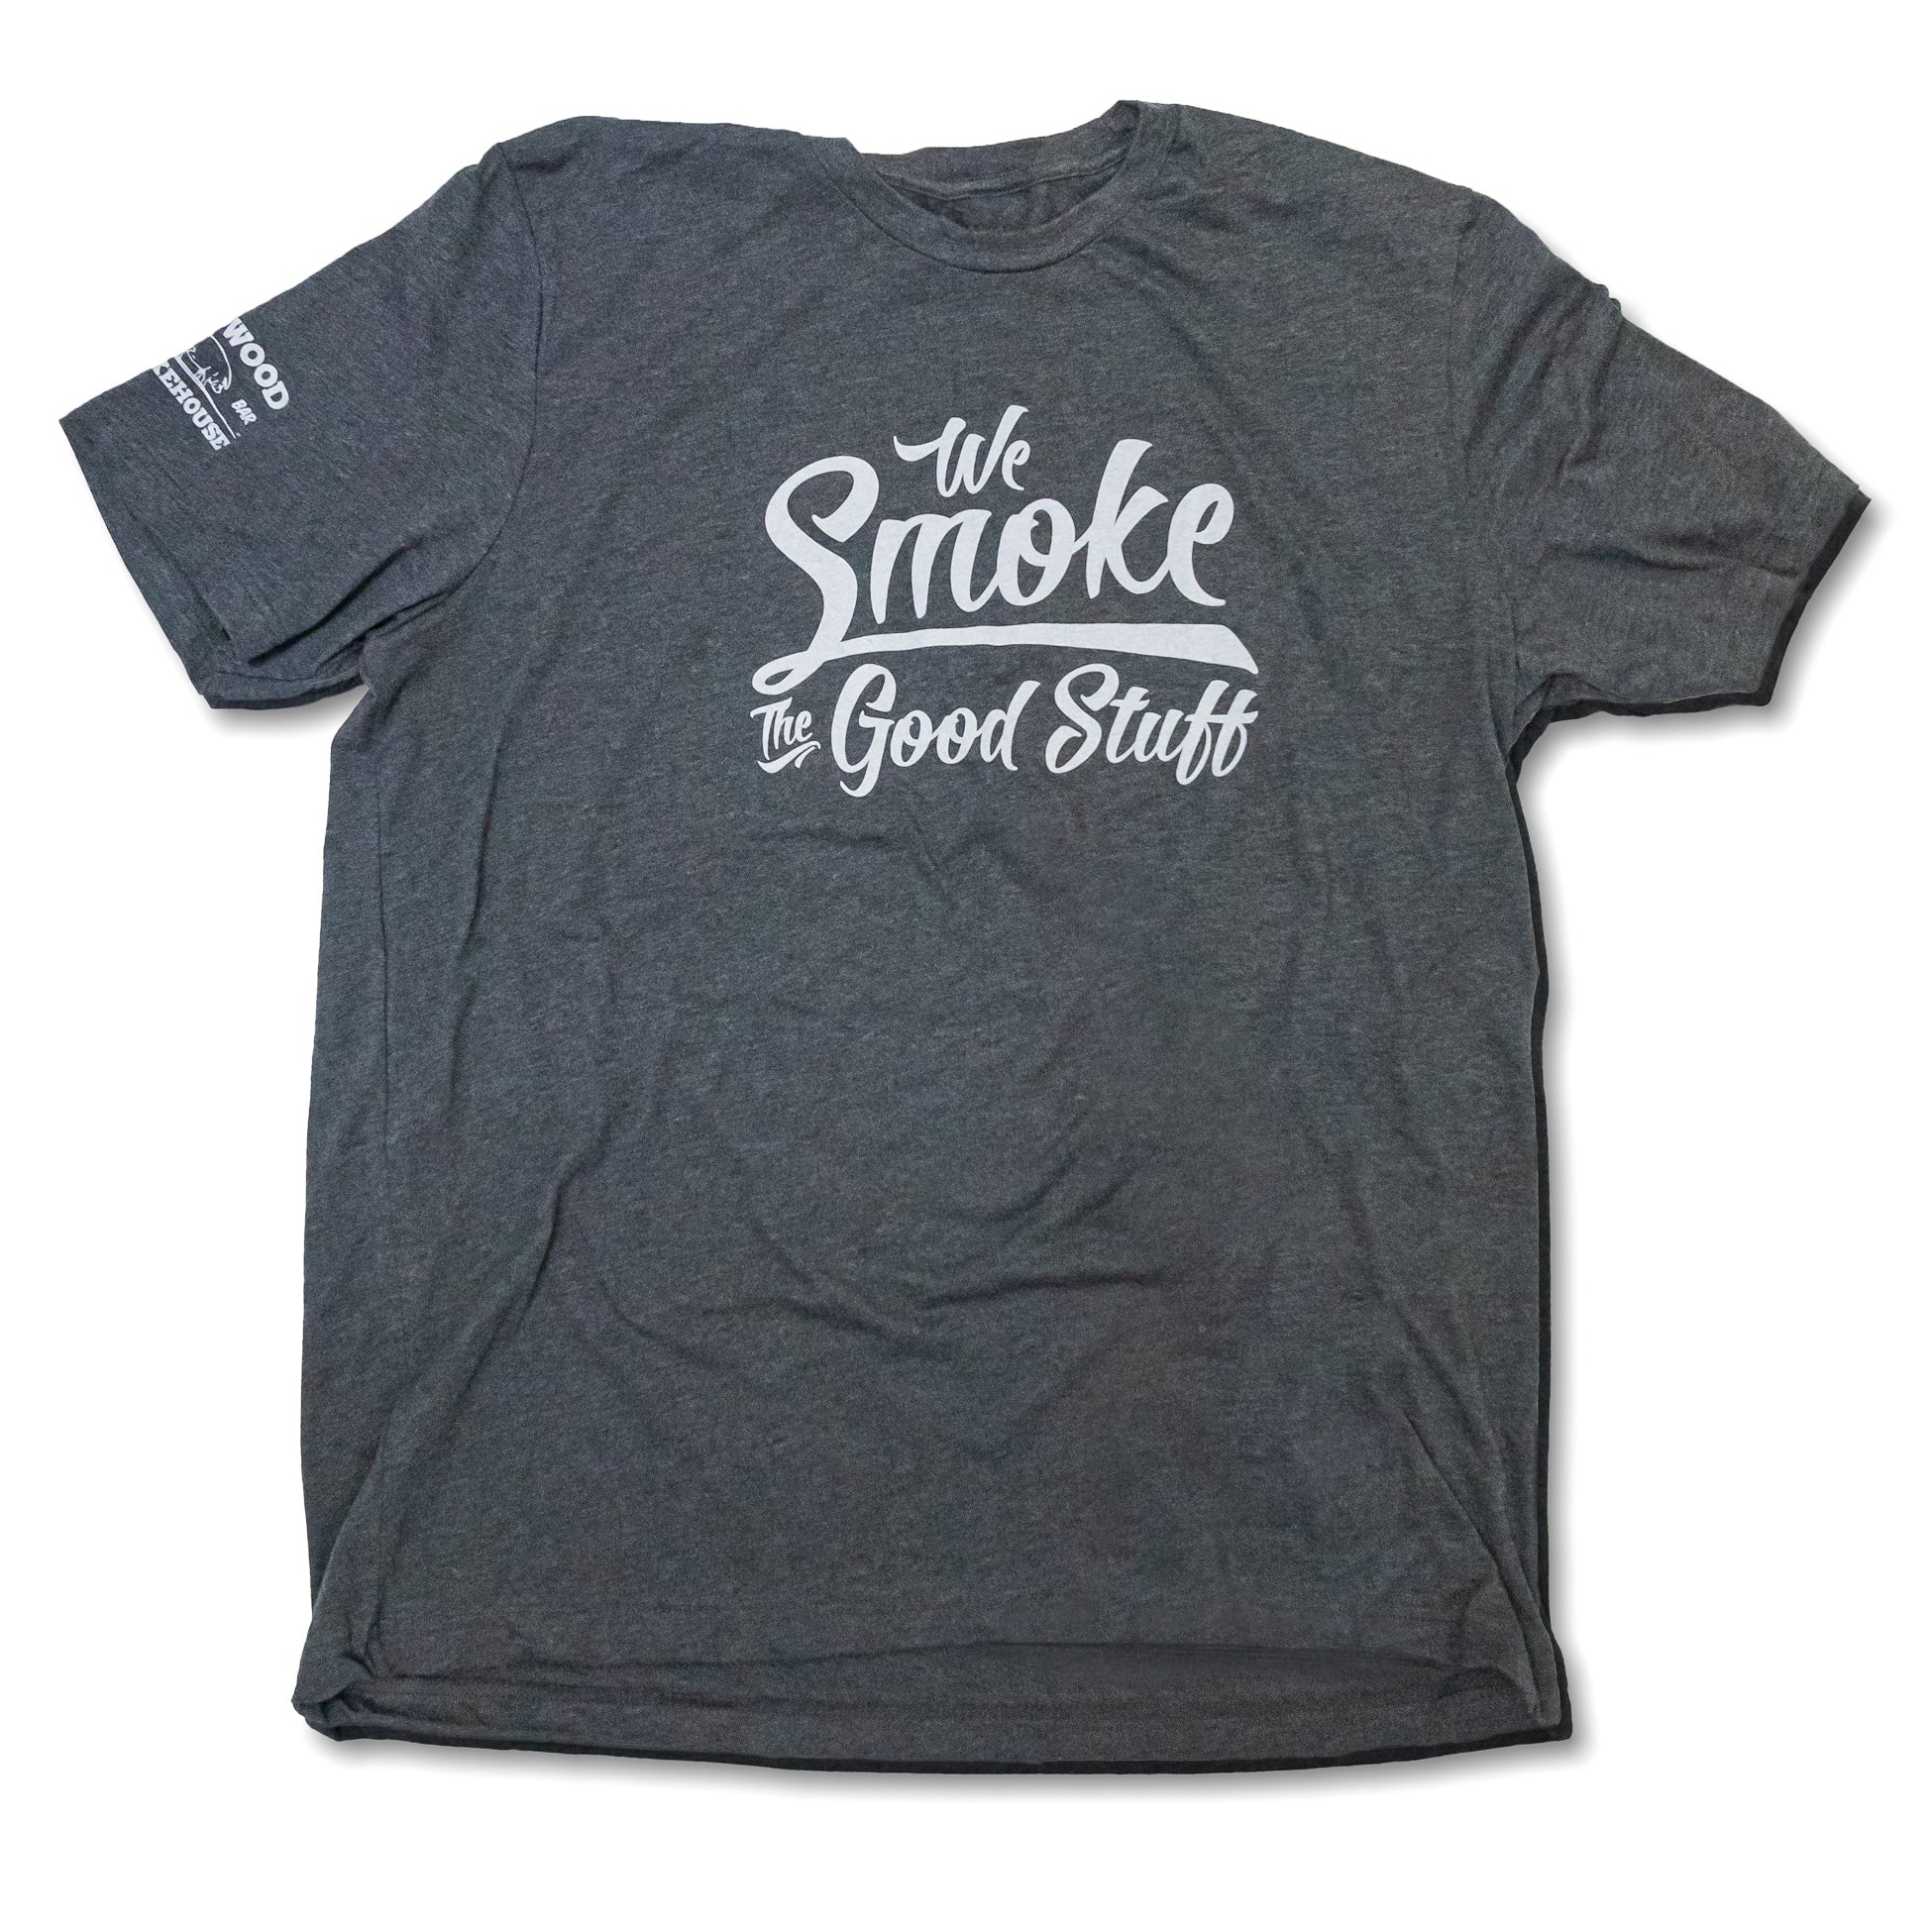 We Smoke the Good Stuff T-shirt